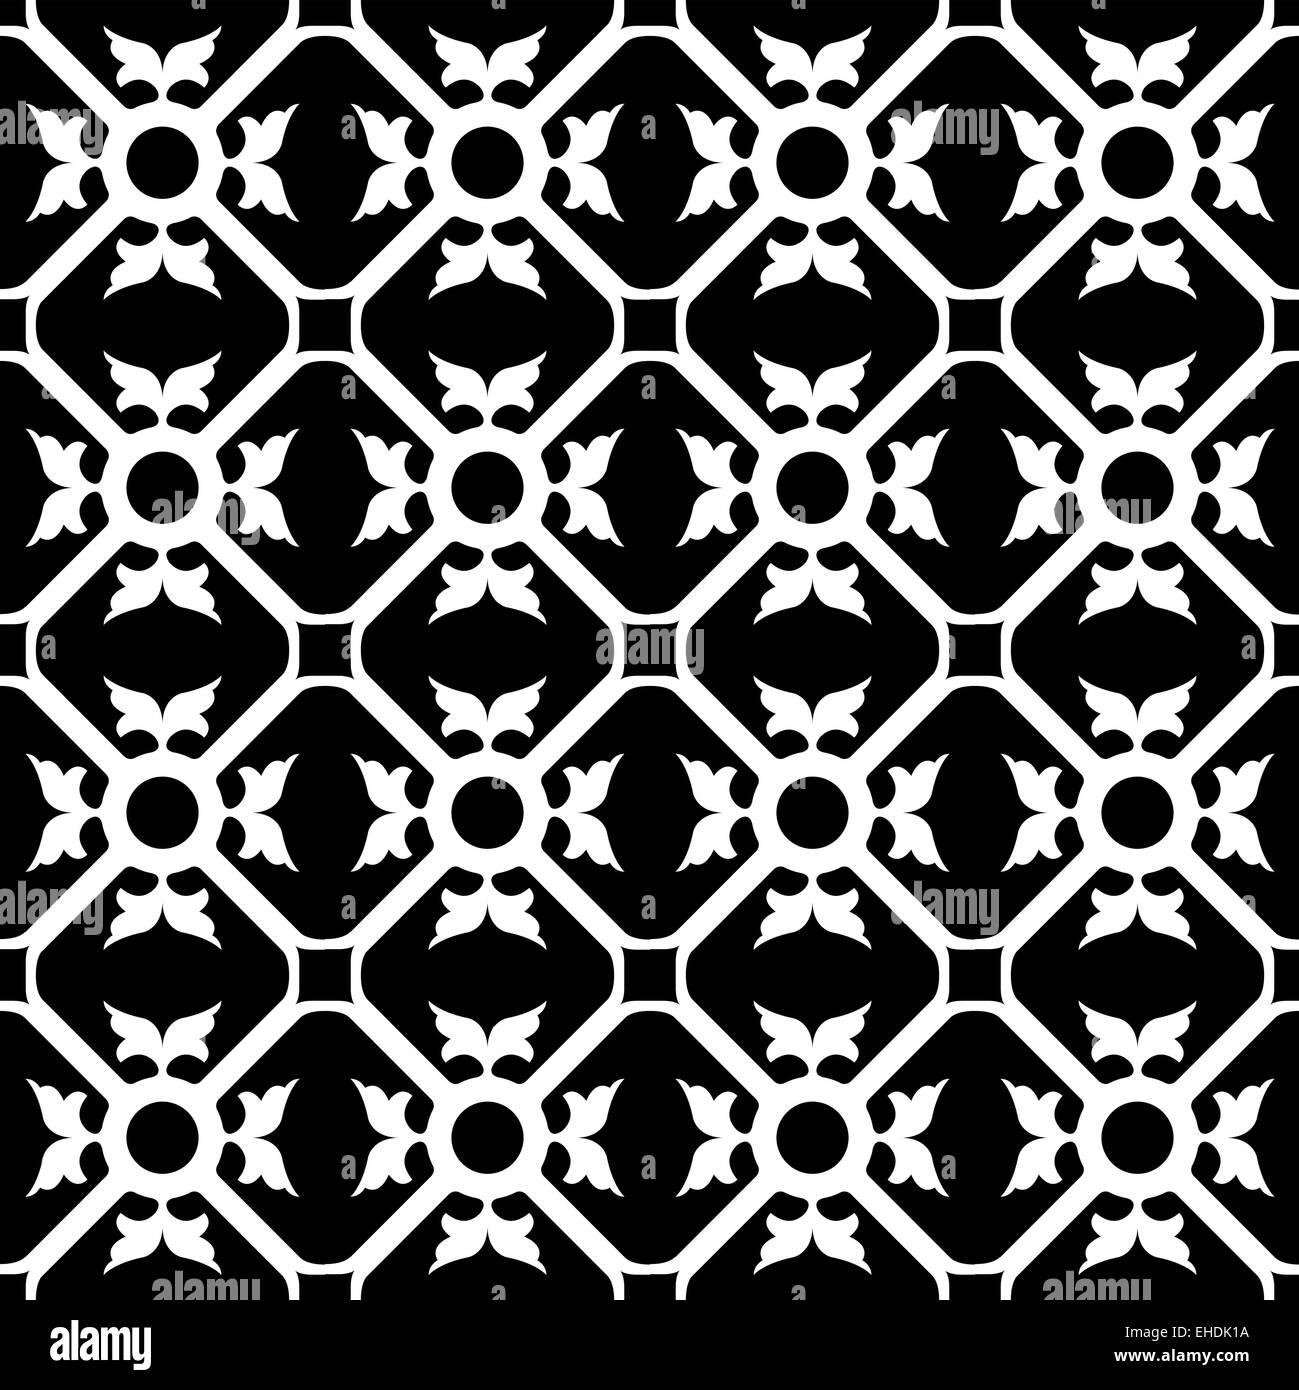 symmetrical flower pattern Stock Photo